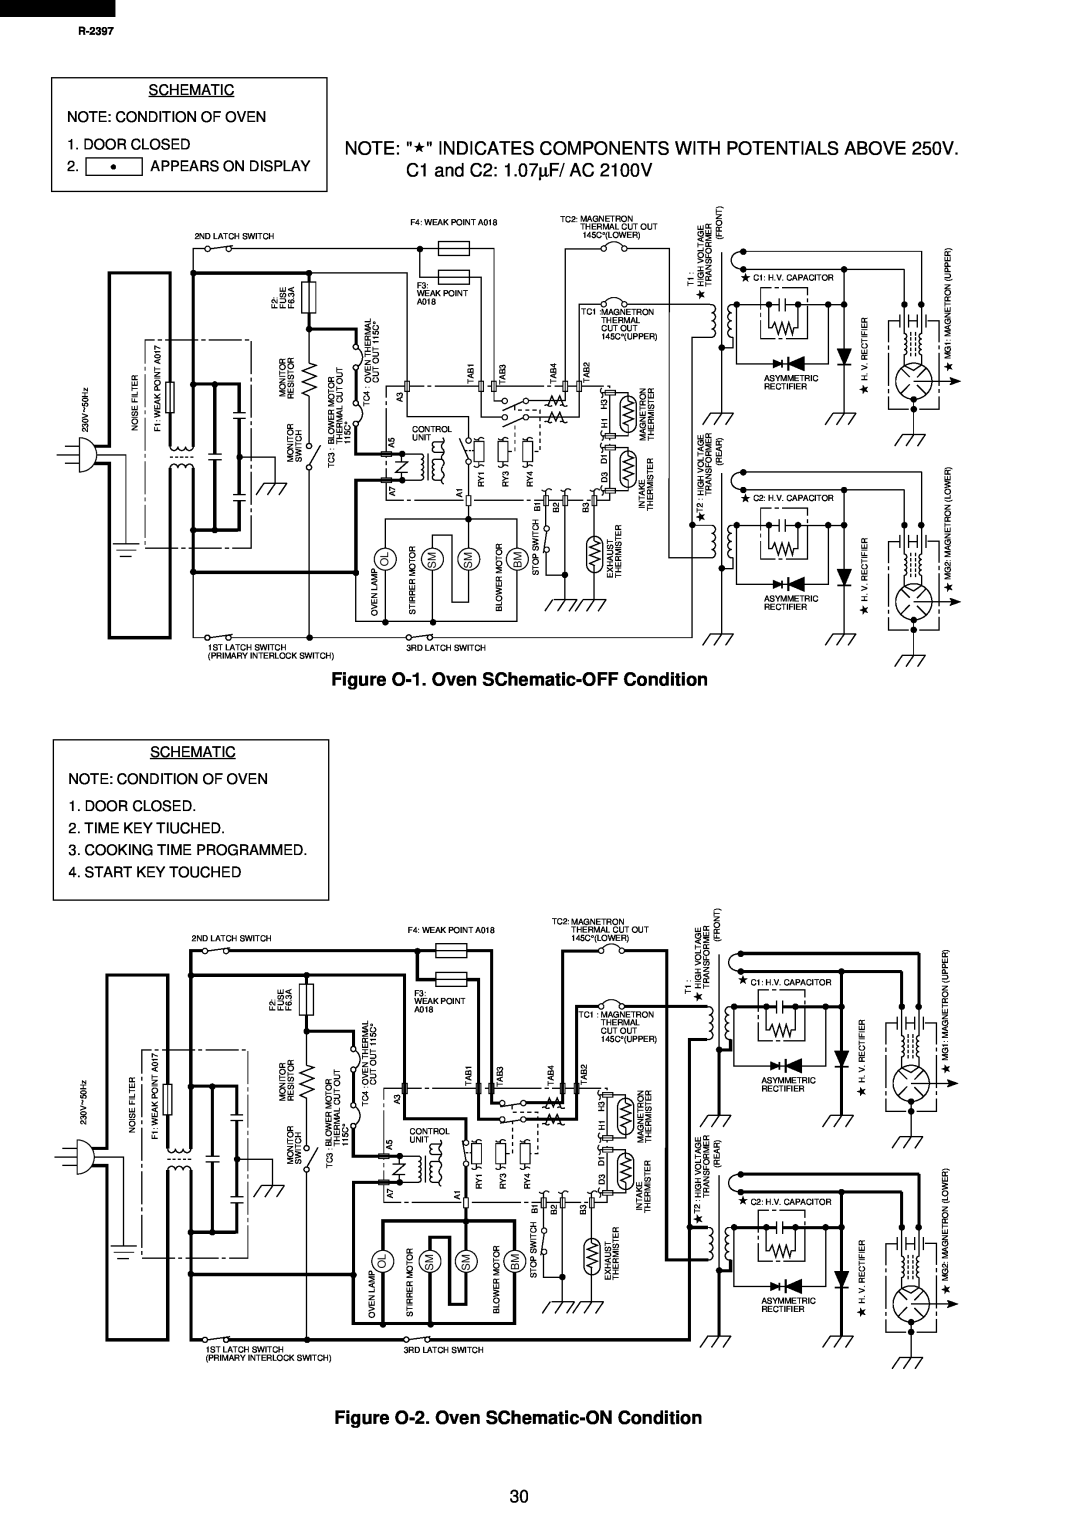 Sharp R-2397 service manual Figure O-1.Oven SChematic-OFFCondition, Figure O-2.Oven SChematic-ONCondition 